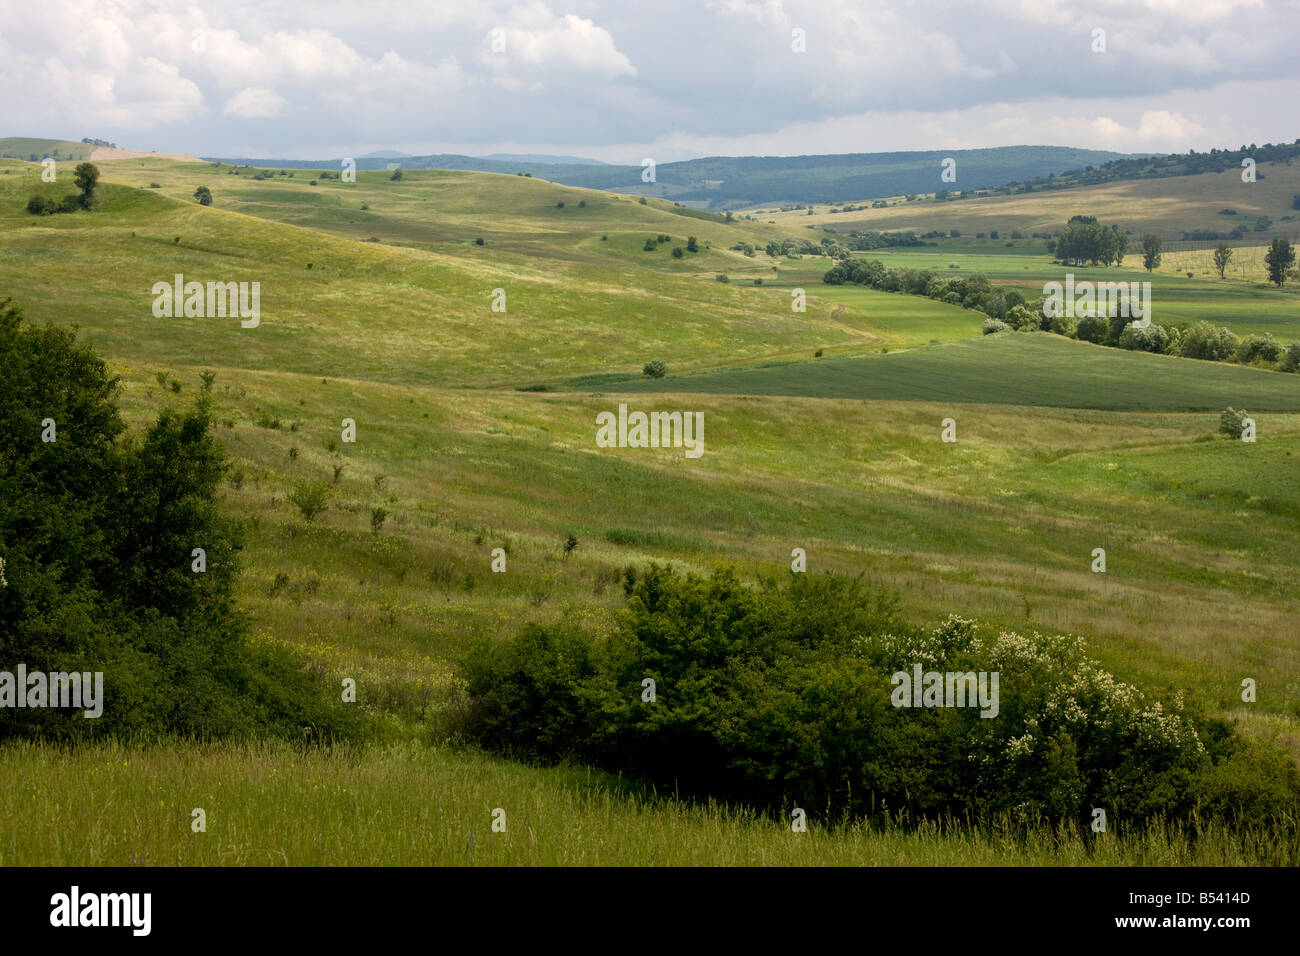 The vast open flowery grasslands around the Saxon village of Viscri in Transilvania Romania Stock Photo